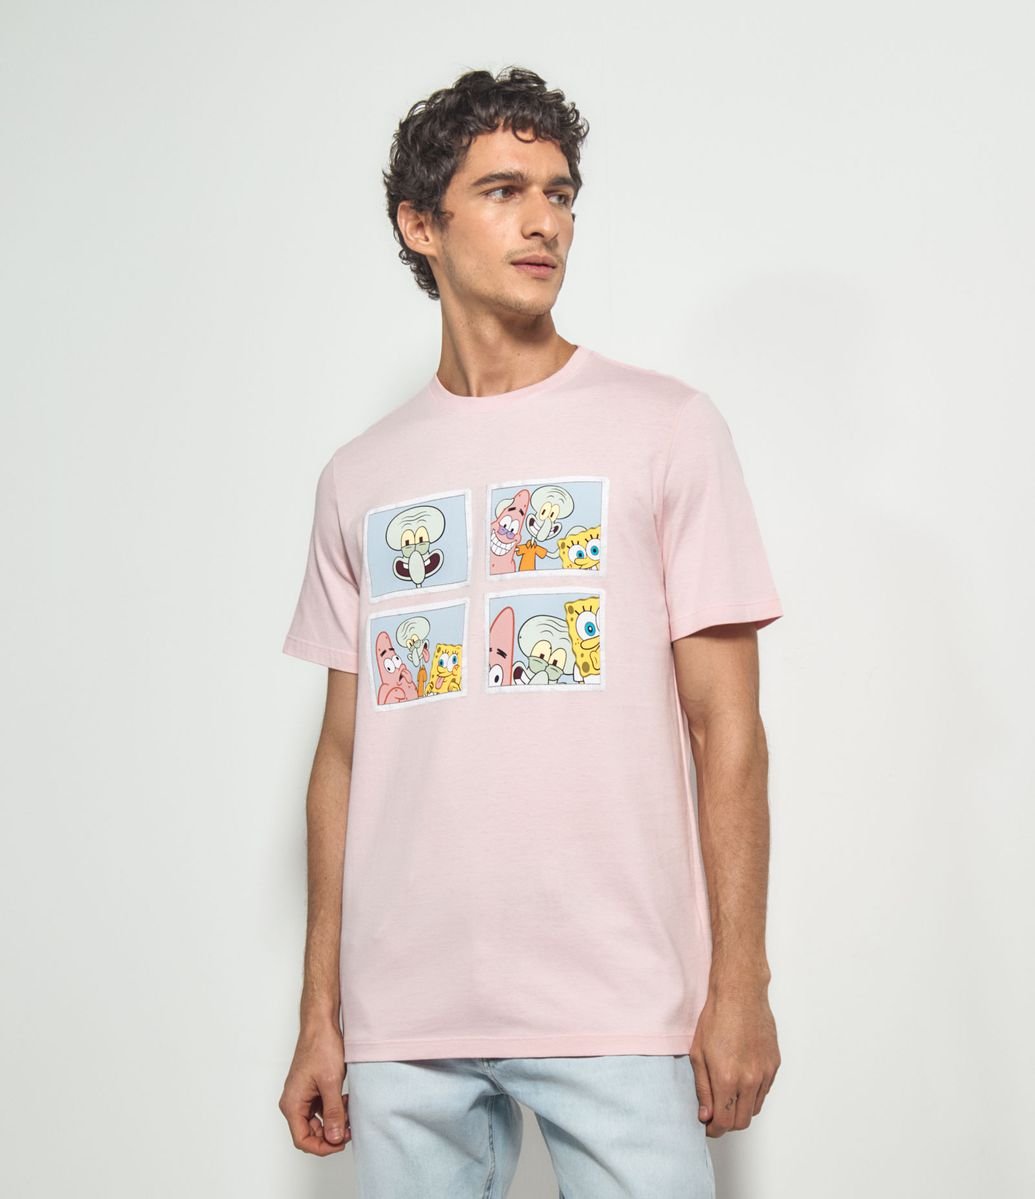 Camiseta Infantil ou Adulto - Bob Esponja - 2 a 14 Anos